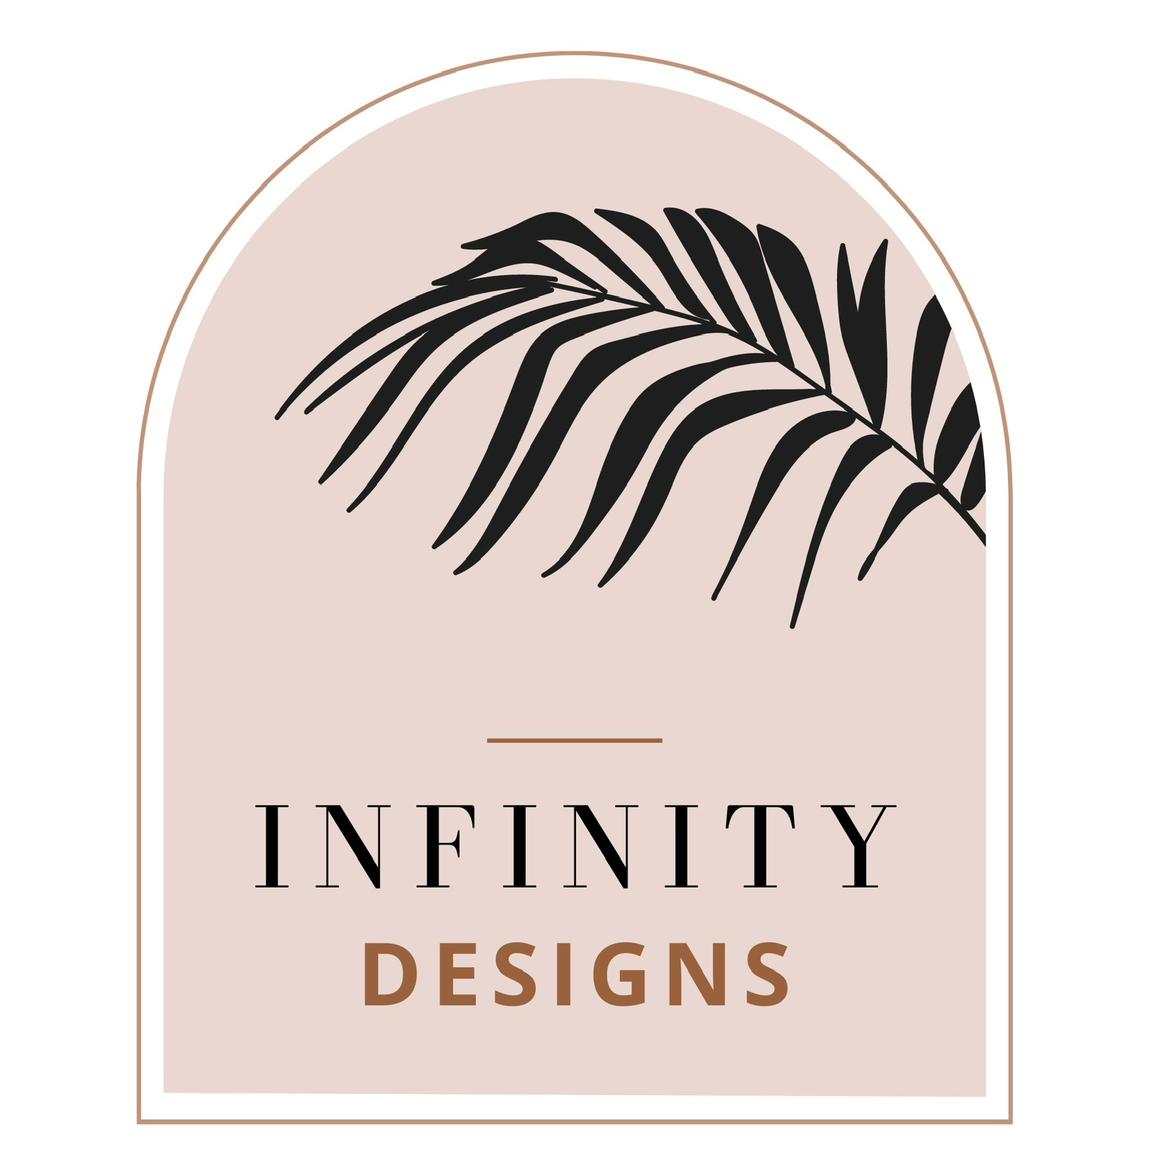 InfinityDesign's images